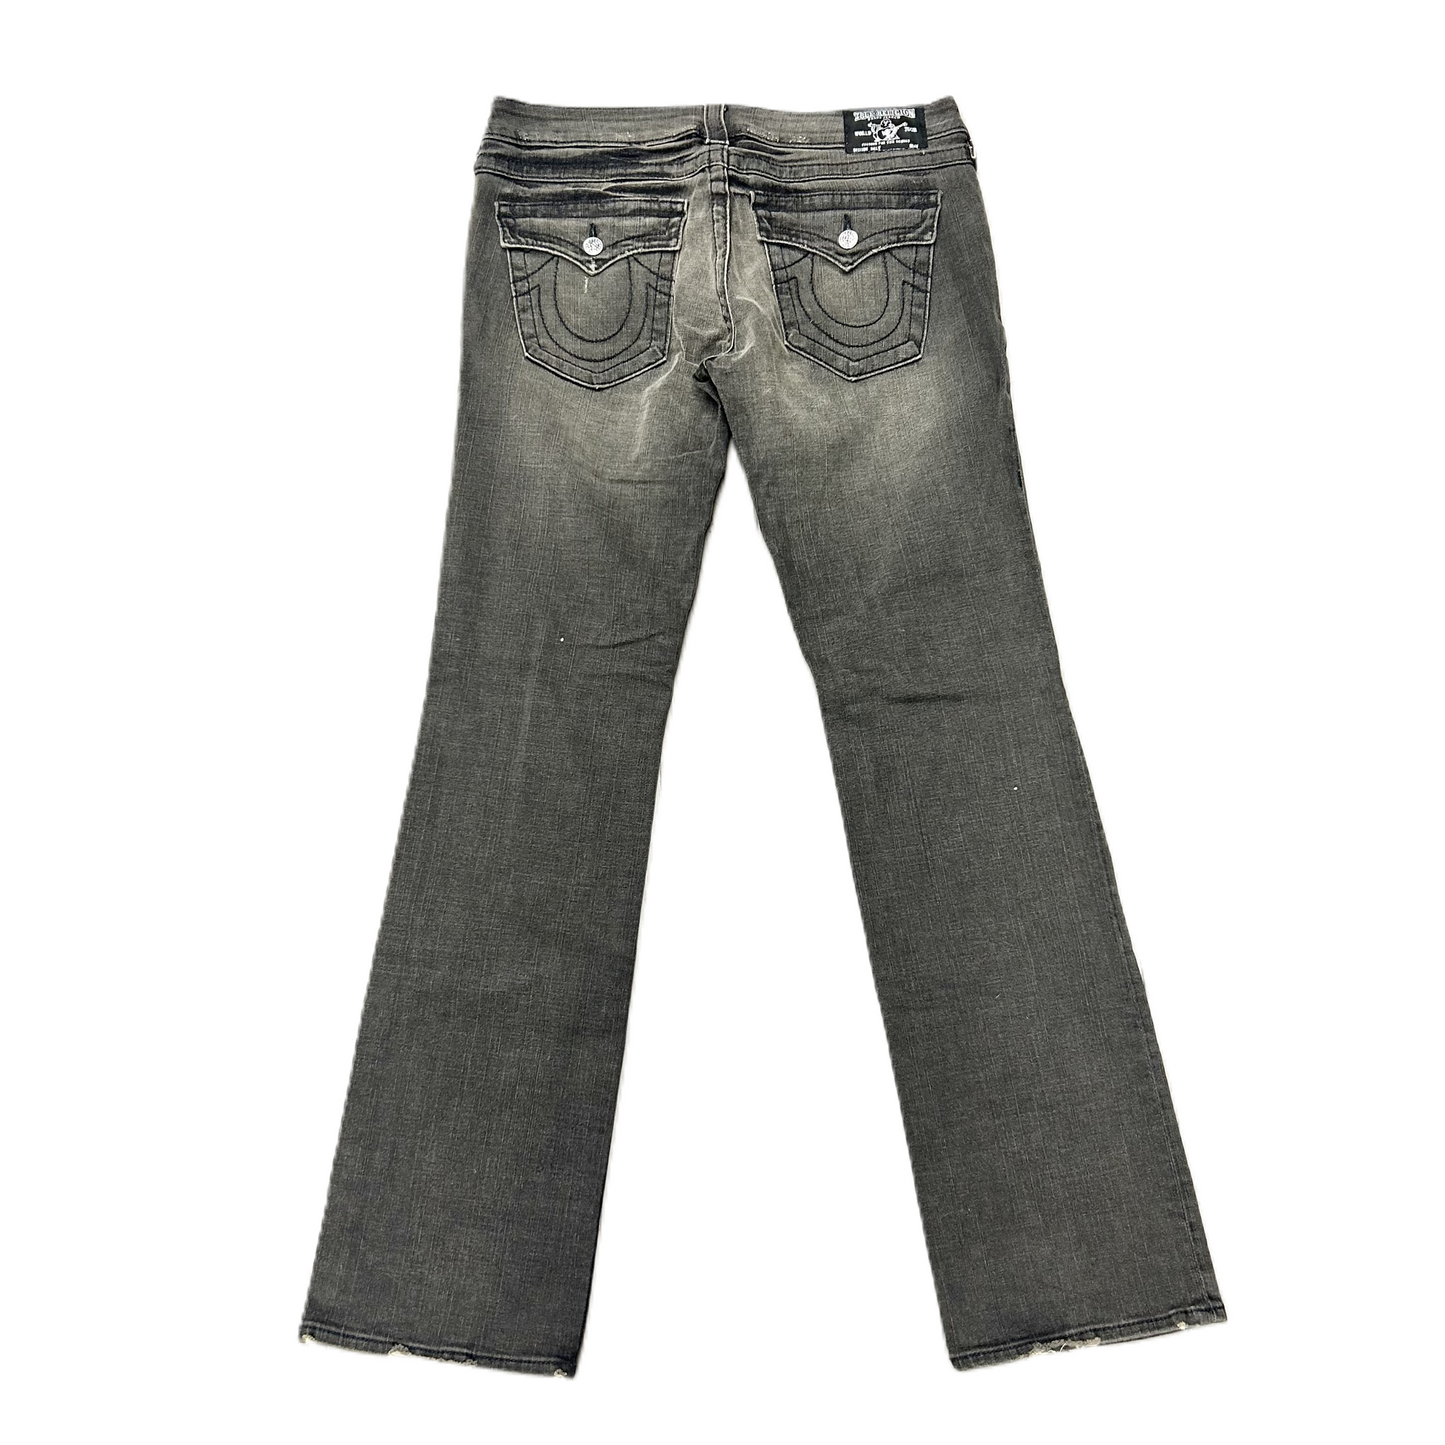 Black & Grey Jeans Designer By True Religion, Size: 14